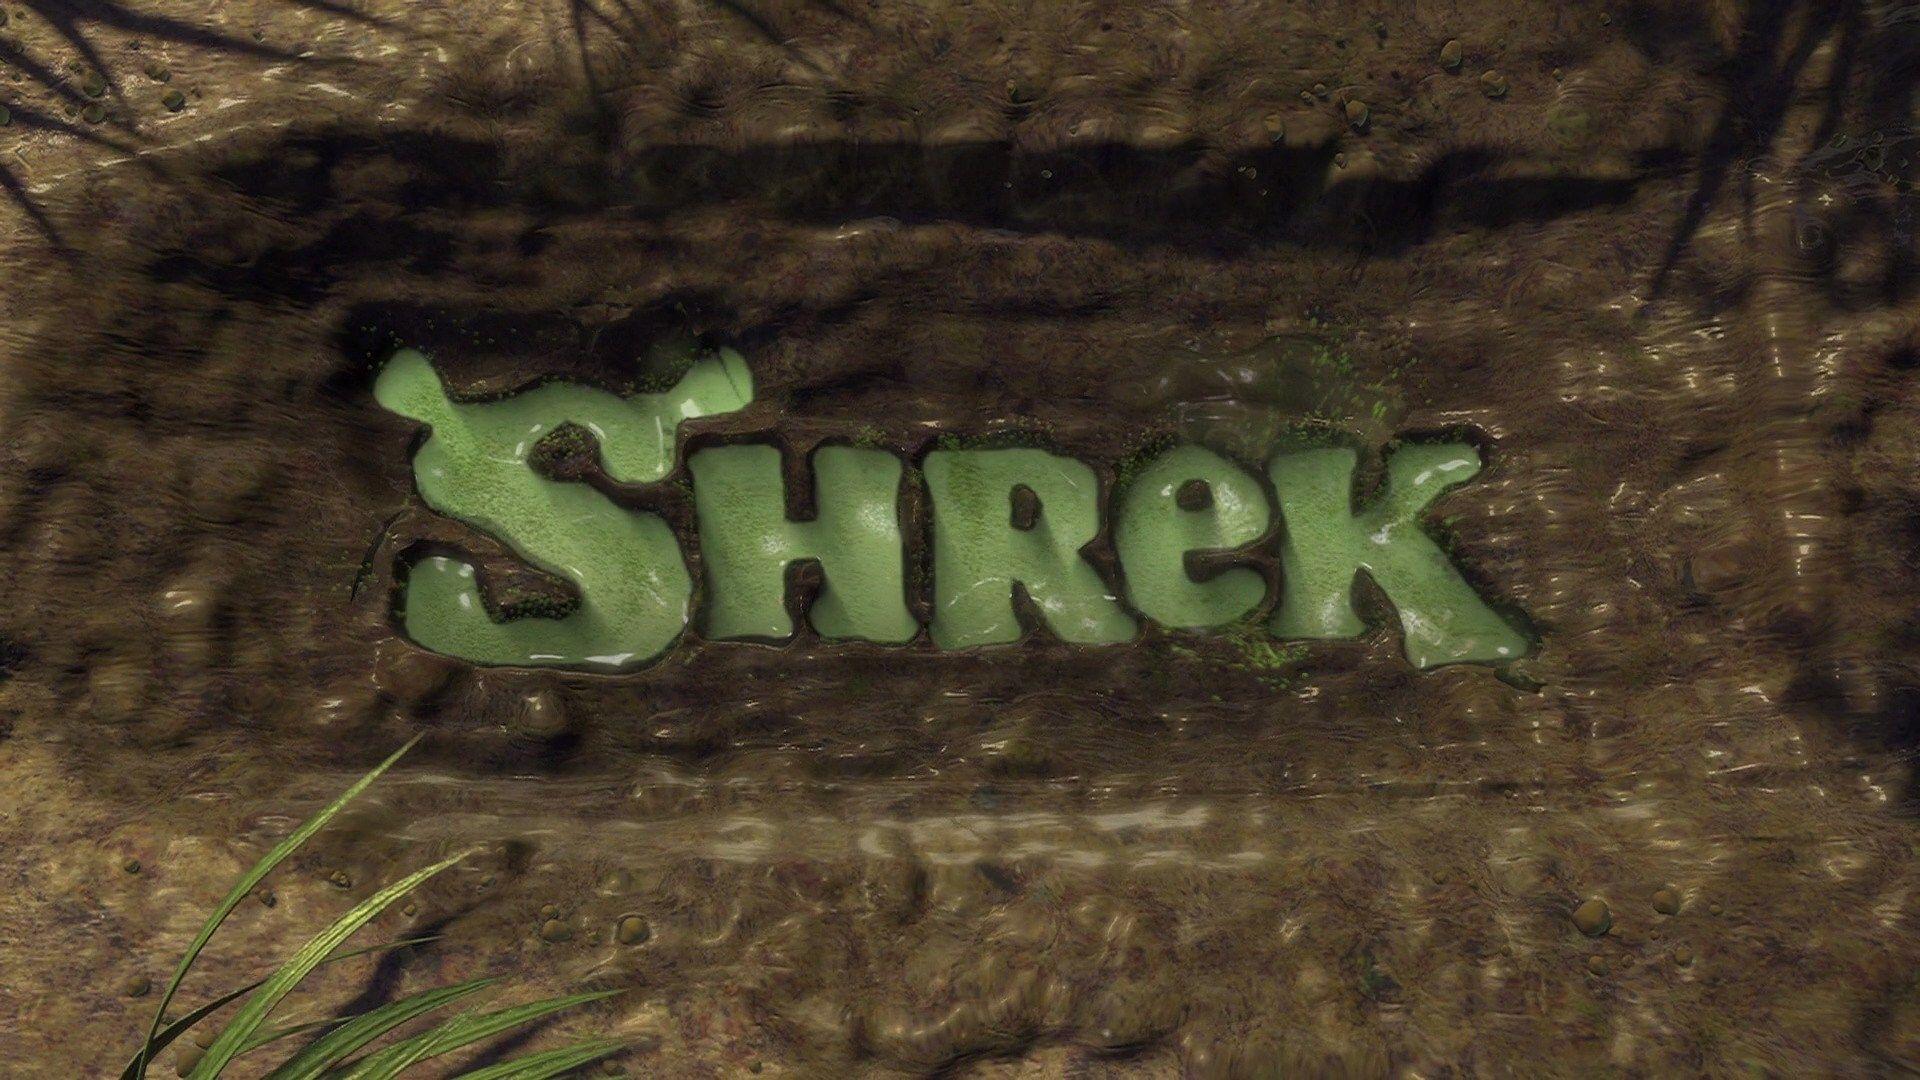 Shrek Logo - Image - Shrek Logo.jpg | Film and Television Wikia | FANDOM powered ...